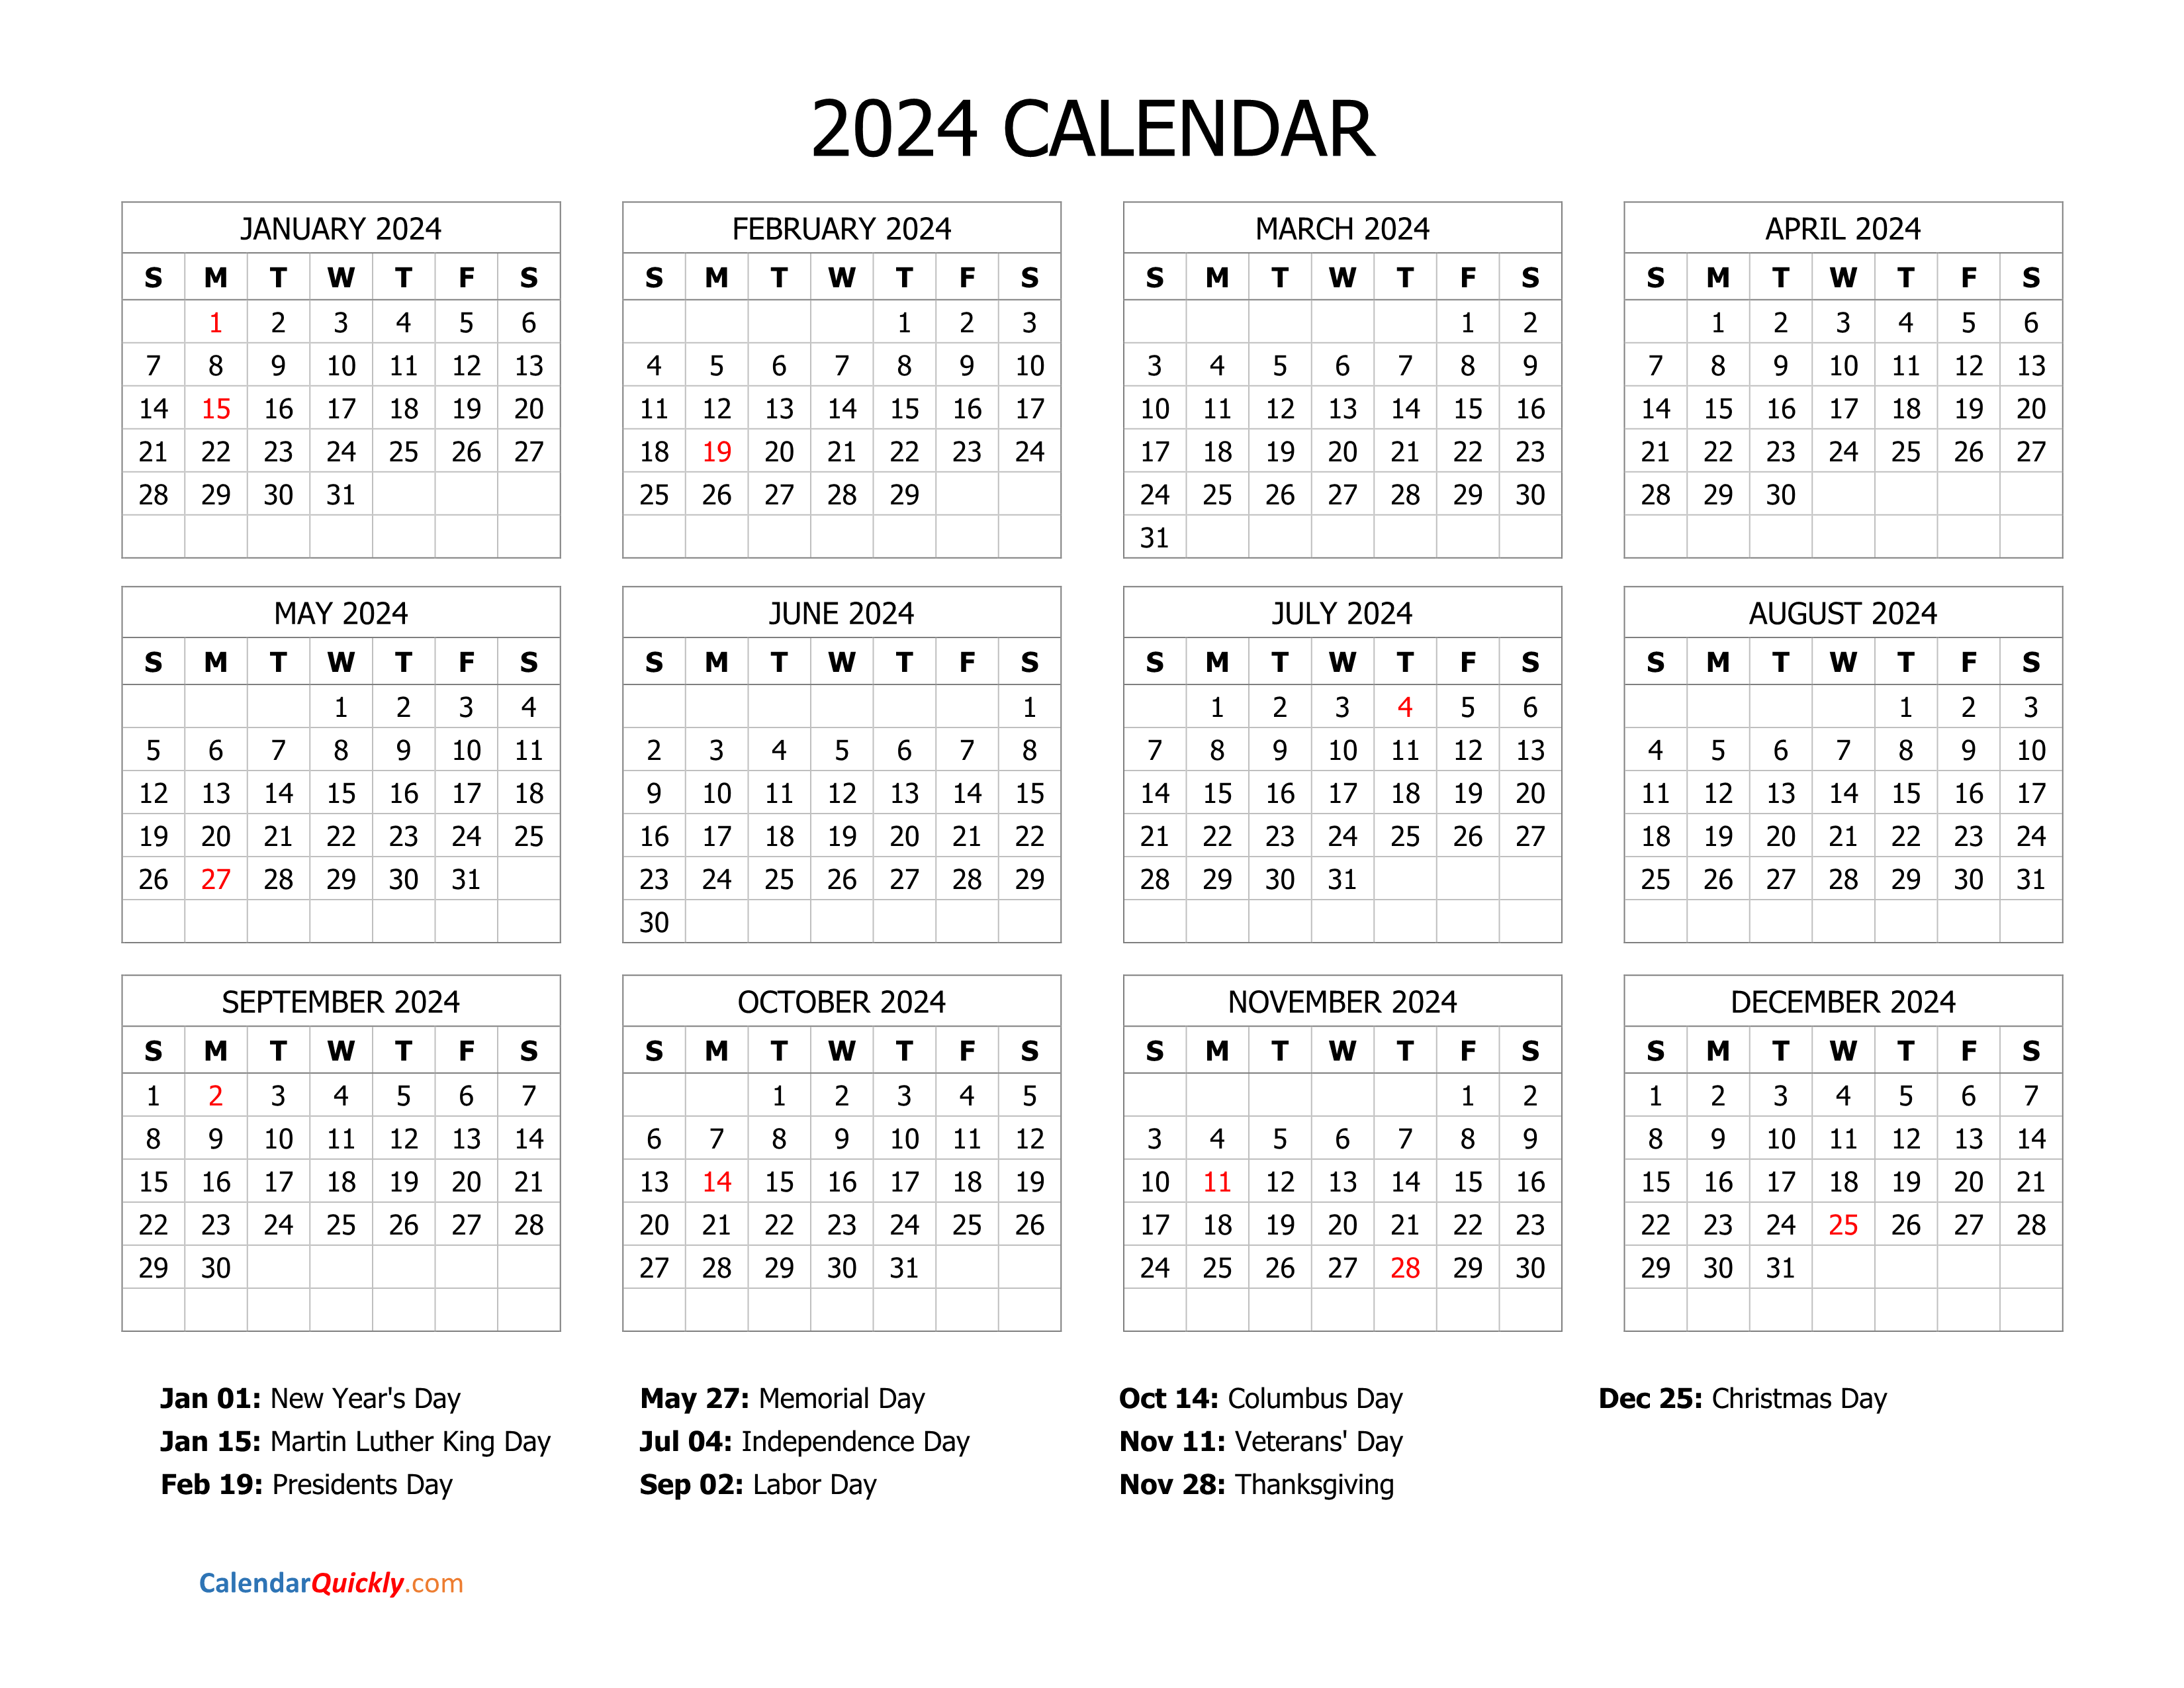 2024 Calendar Free Printable - Free Printable 2024 Calendar With Holidays Imom